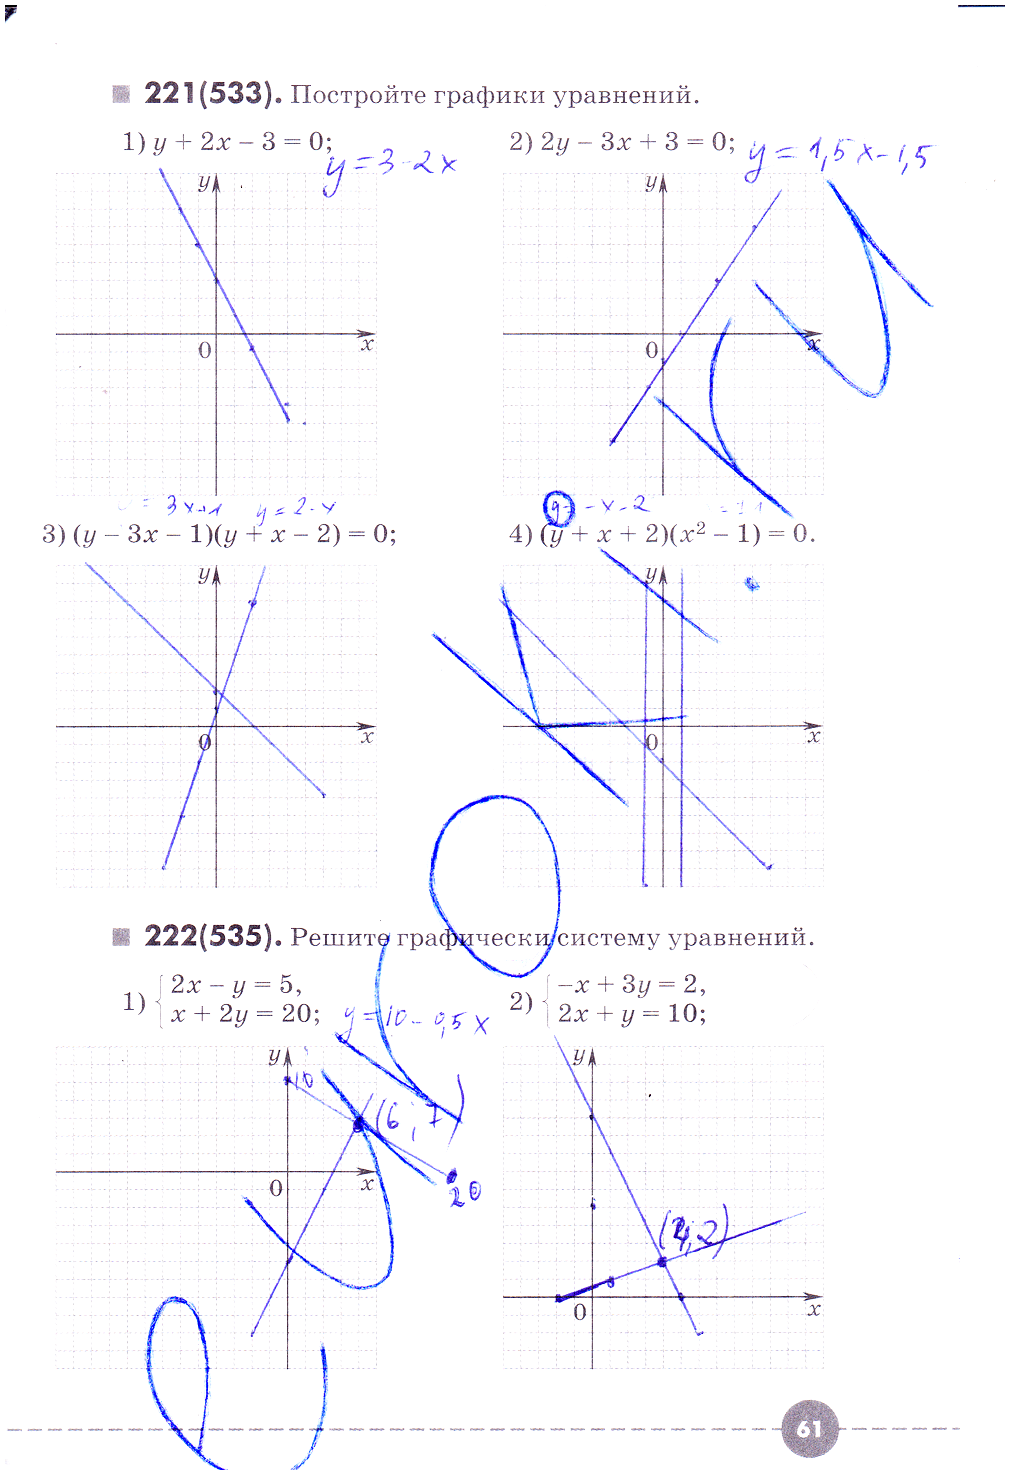 гдз 7 класс рабочая тетрадь часть 2 страница 61 алгебра Муравин, Муравина